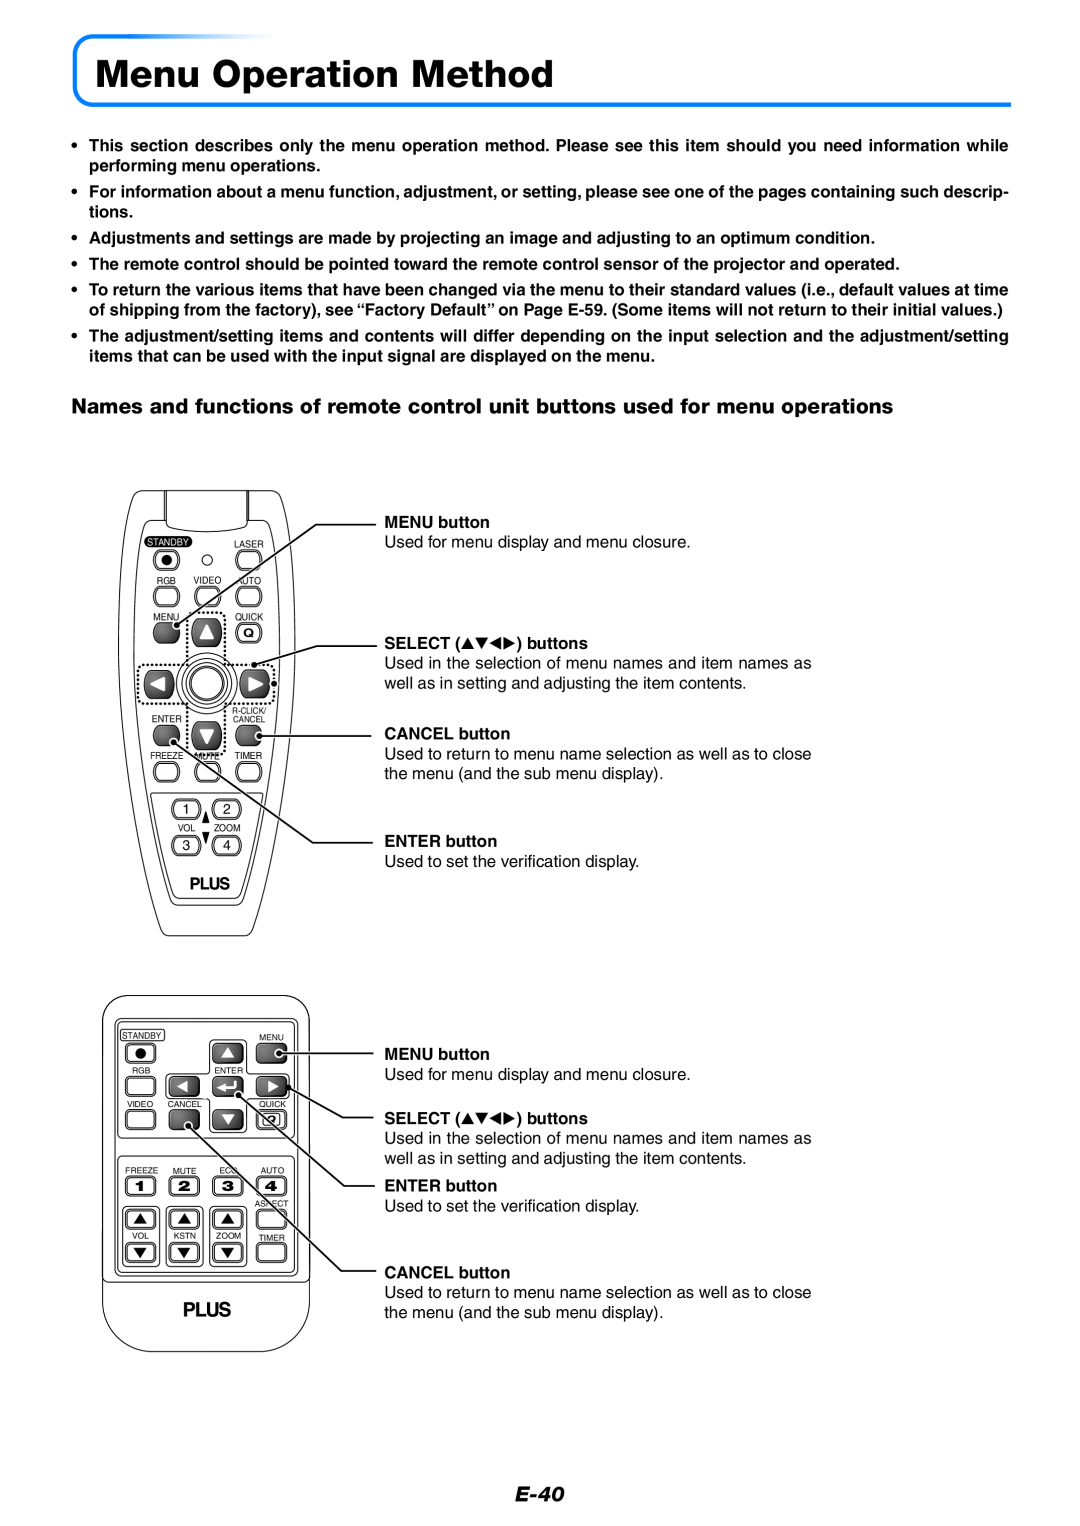 PLUS Vision U5-512, U5-632, U5-532 Menu Operation Method, E-40, MENU button, SELECT buttons, CANCEL button, ENTER button 